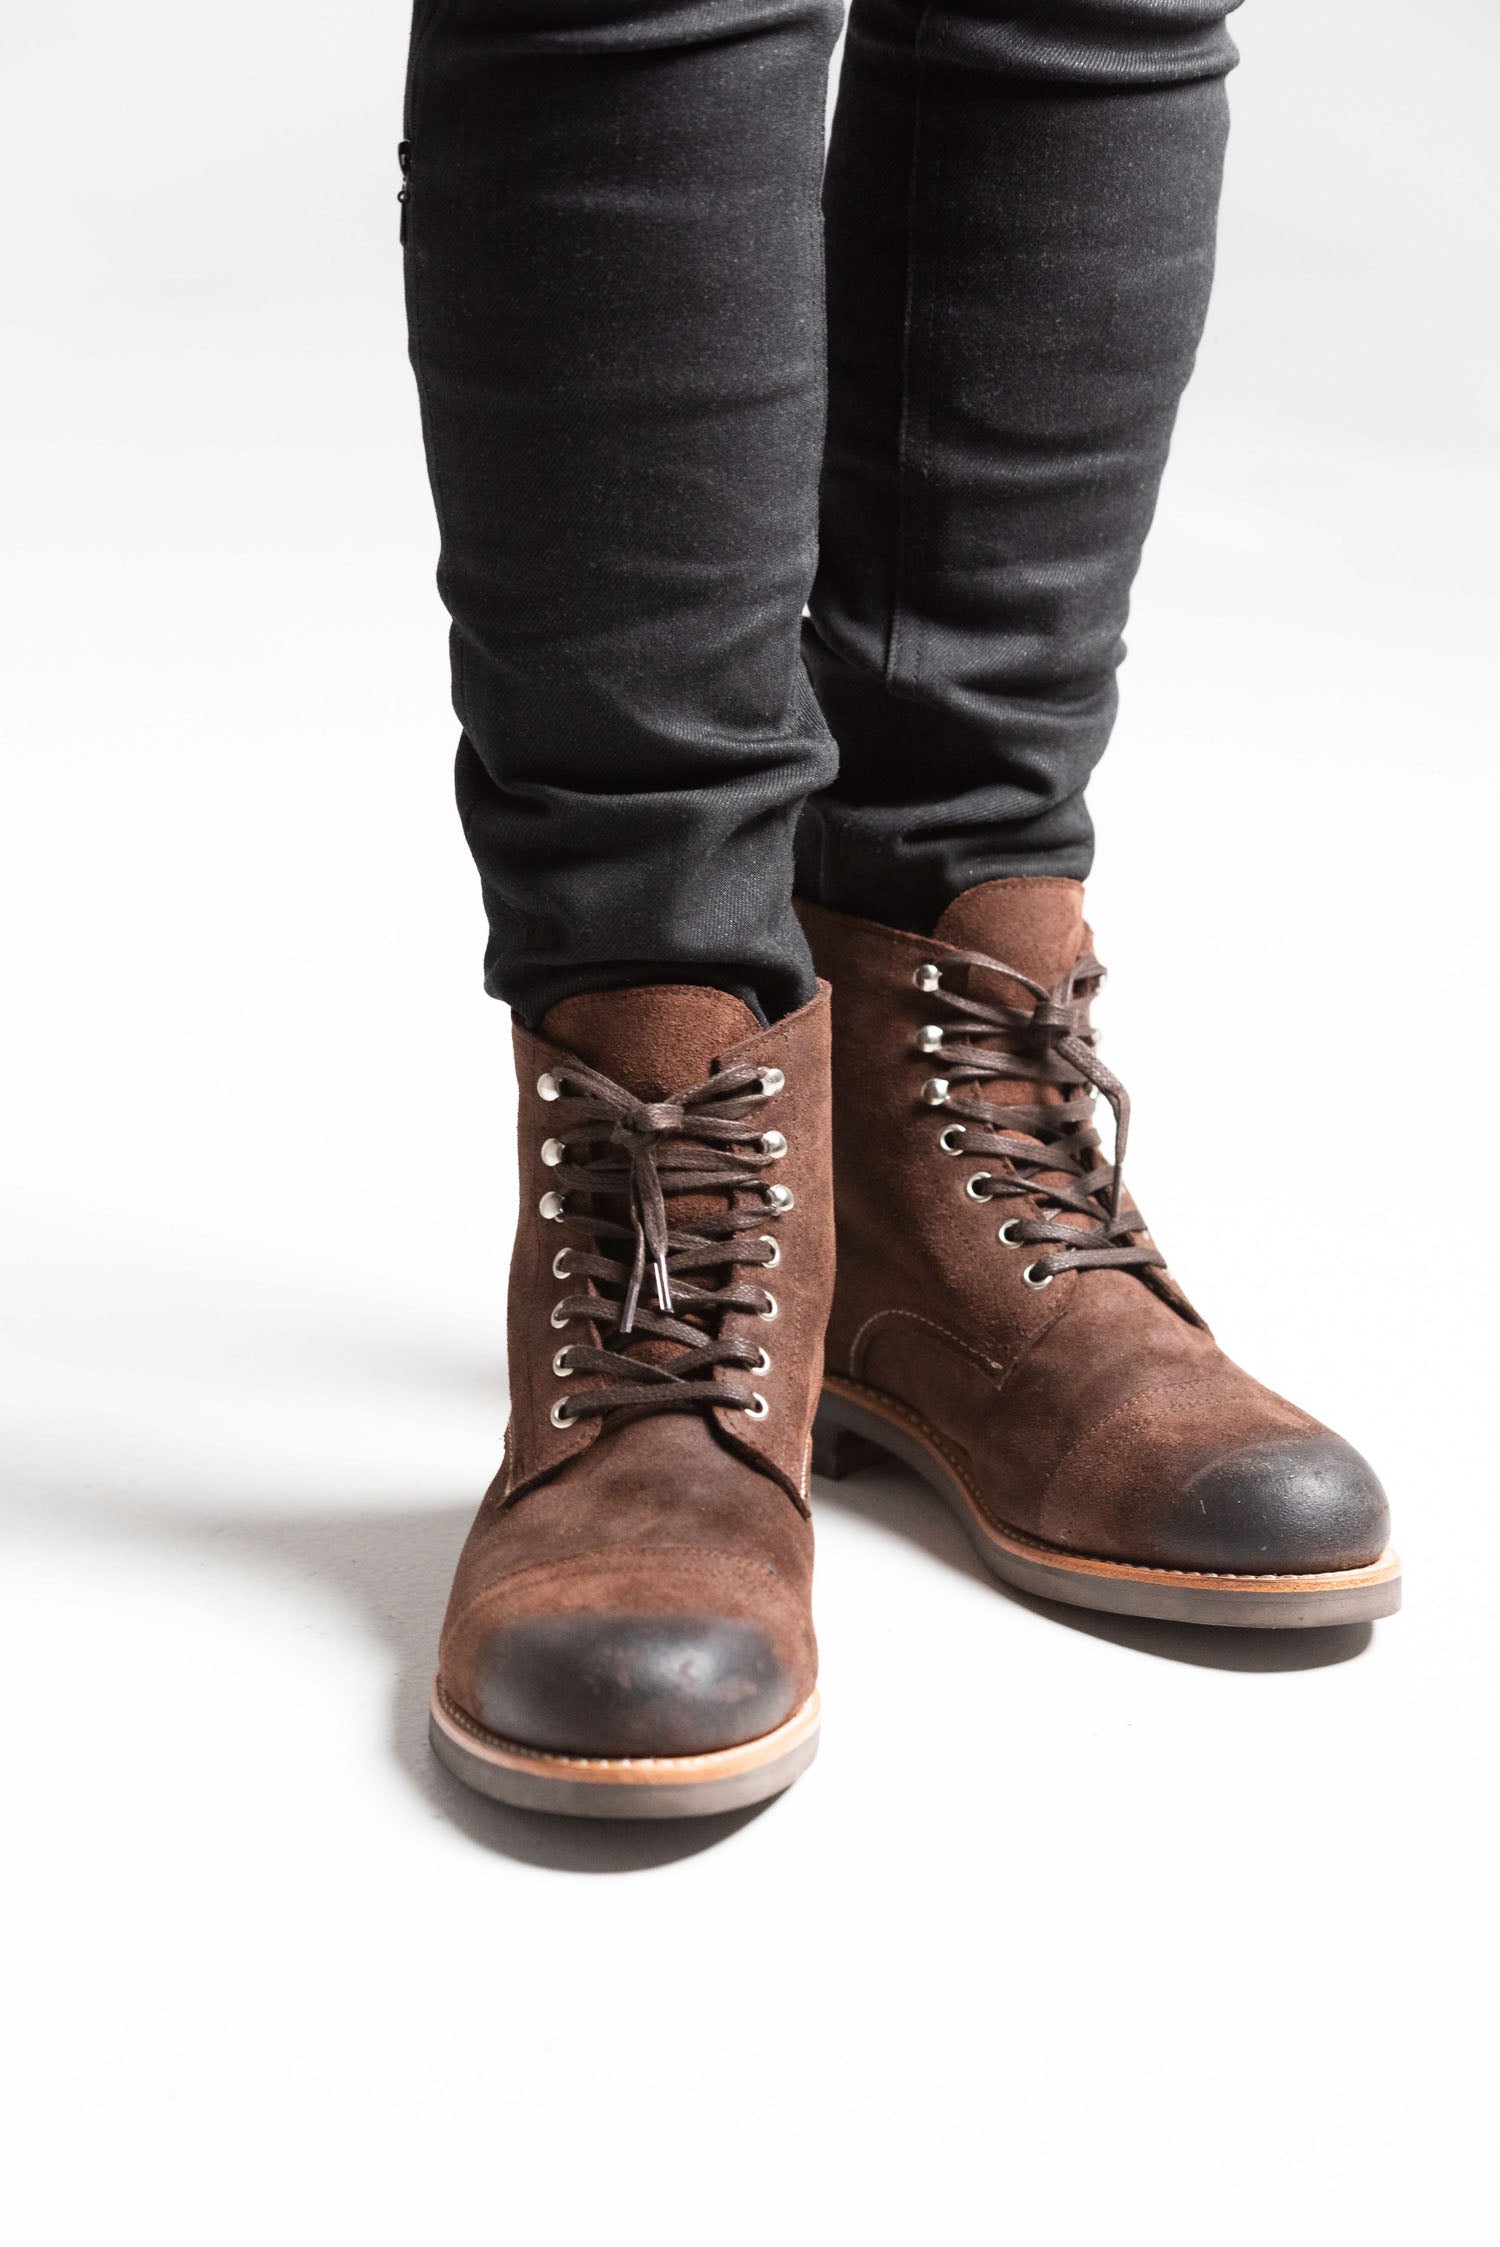 Cavaleiro Premium Leather Boots | Mens Leather Boots | Merla Moto